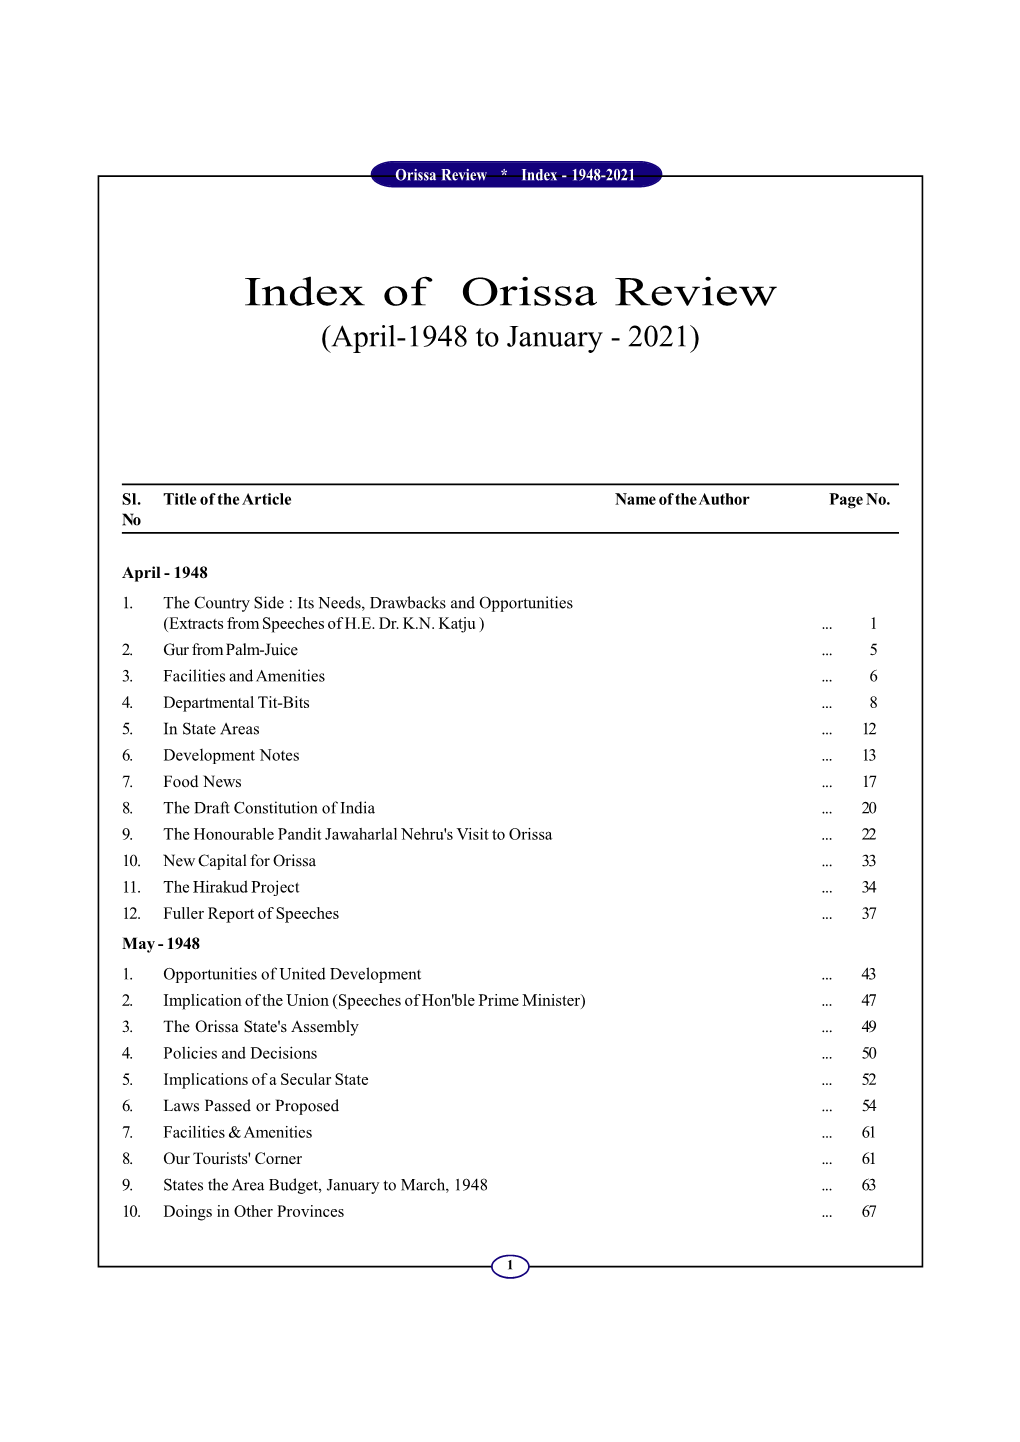 Odisha Review Index